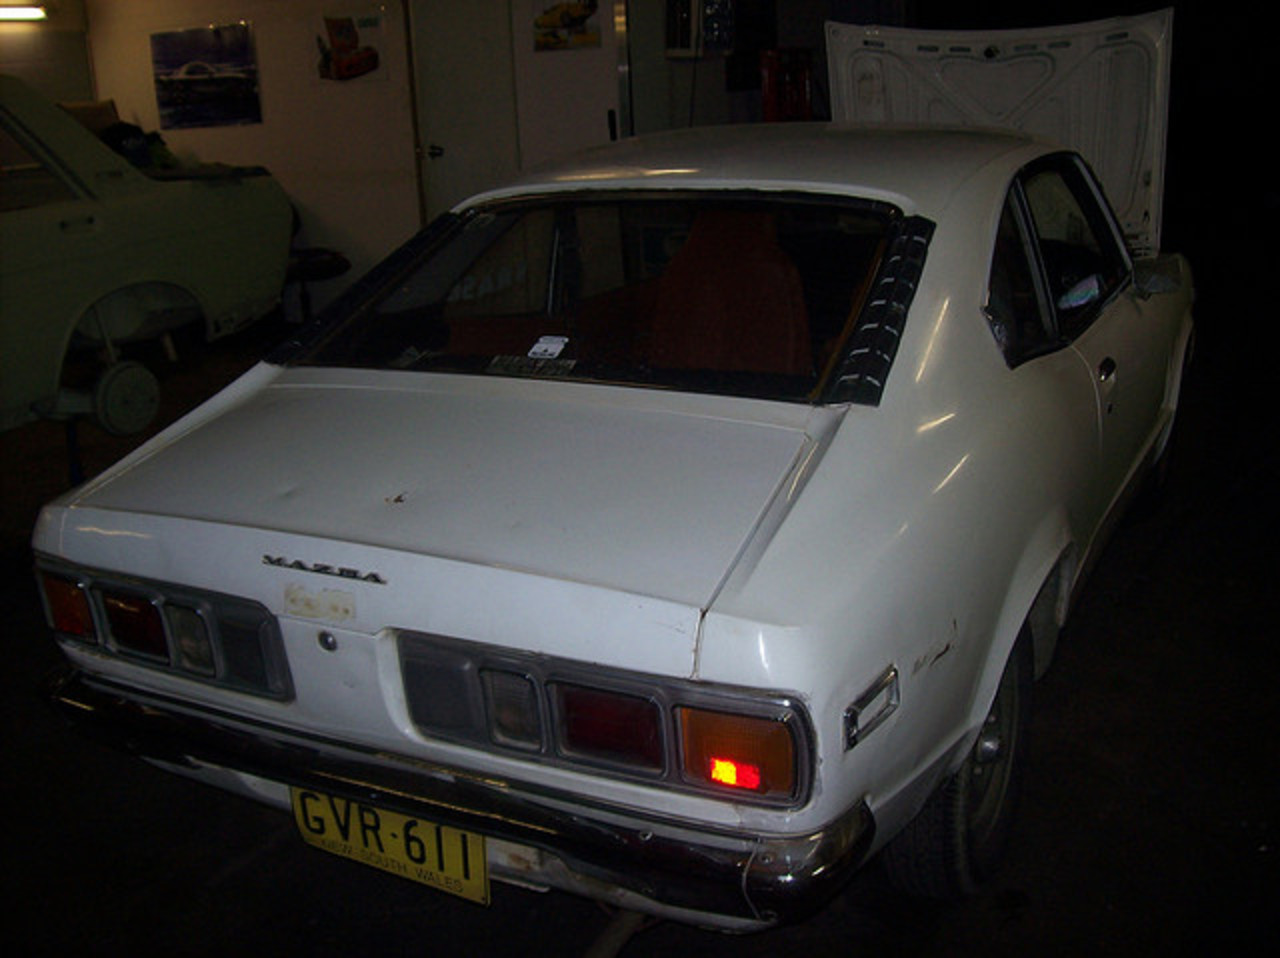 1974 Mazda 808 Super Deluxe Coupe (original) | Flickr - Photo Sharing!